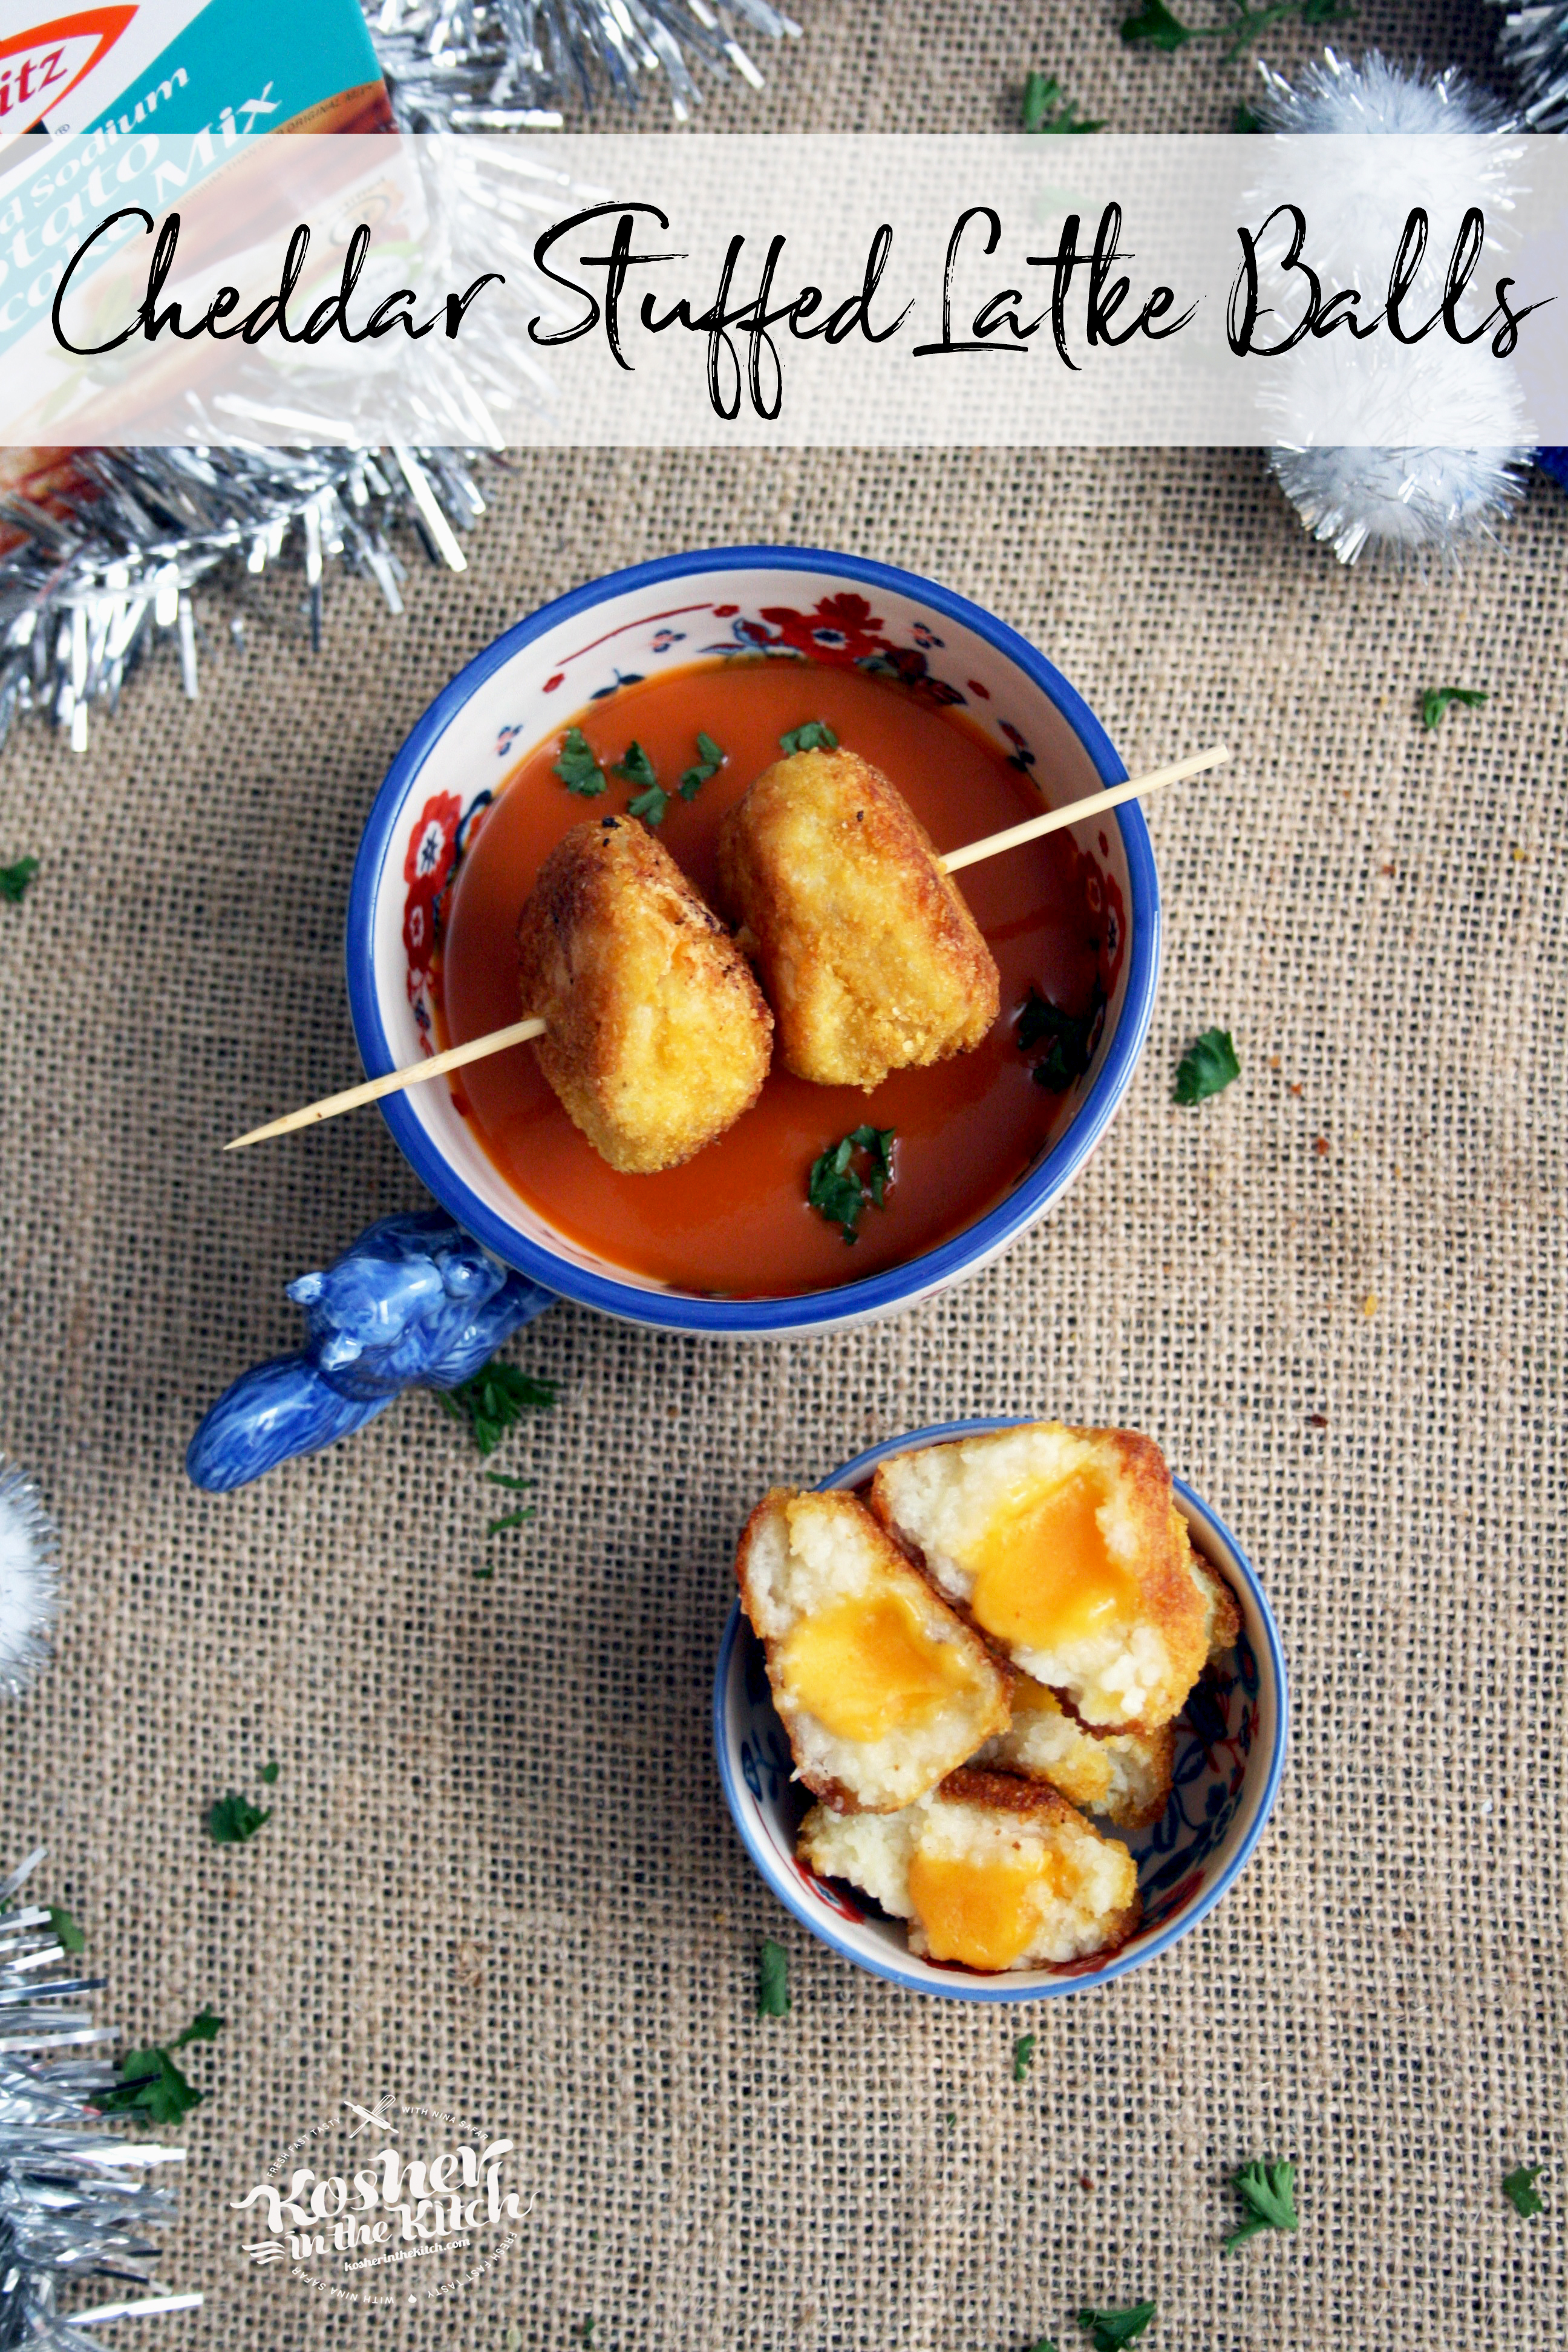 Cheddar Stuffed Latke Balls and Tomato Soup